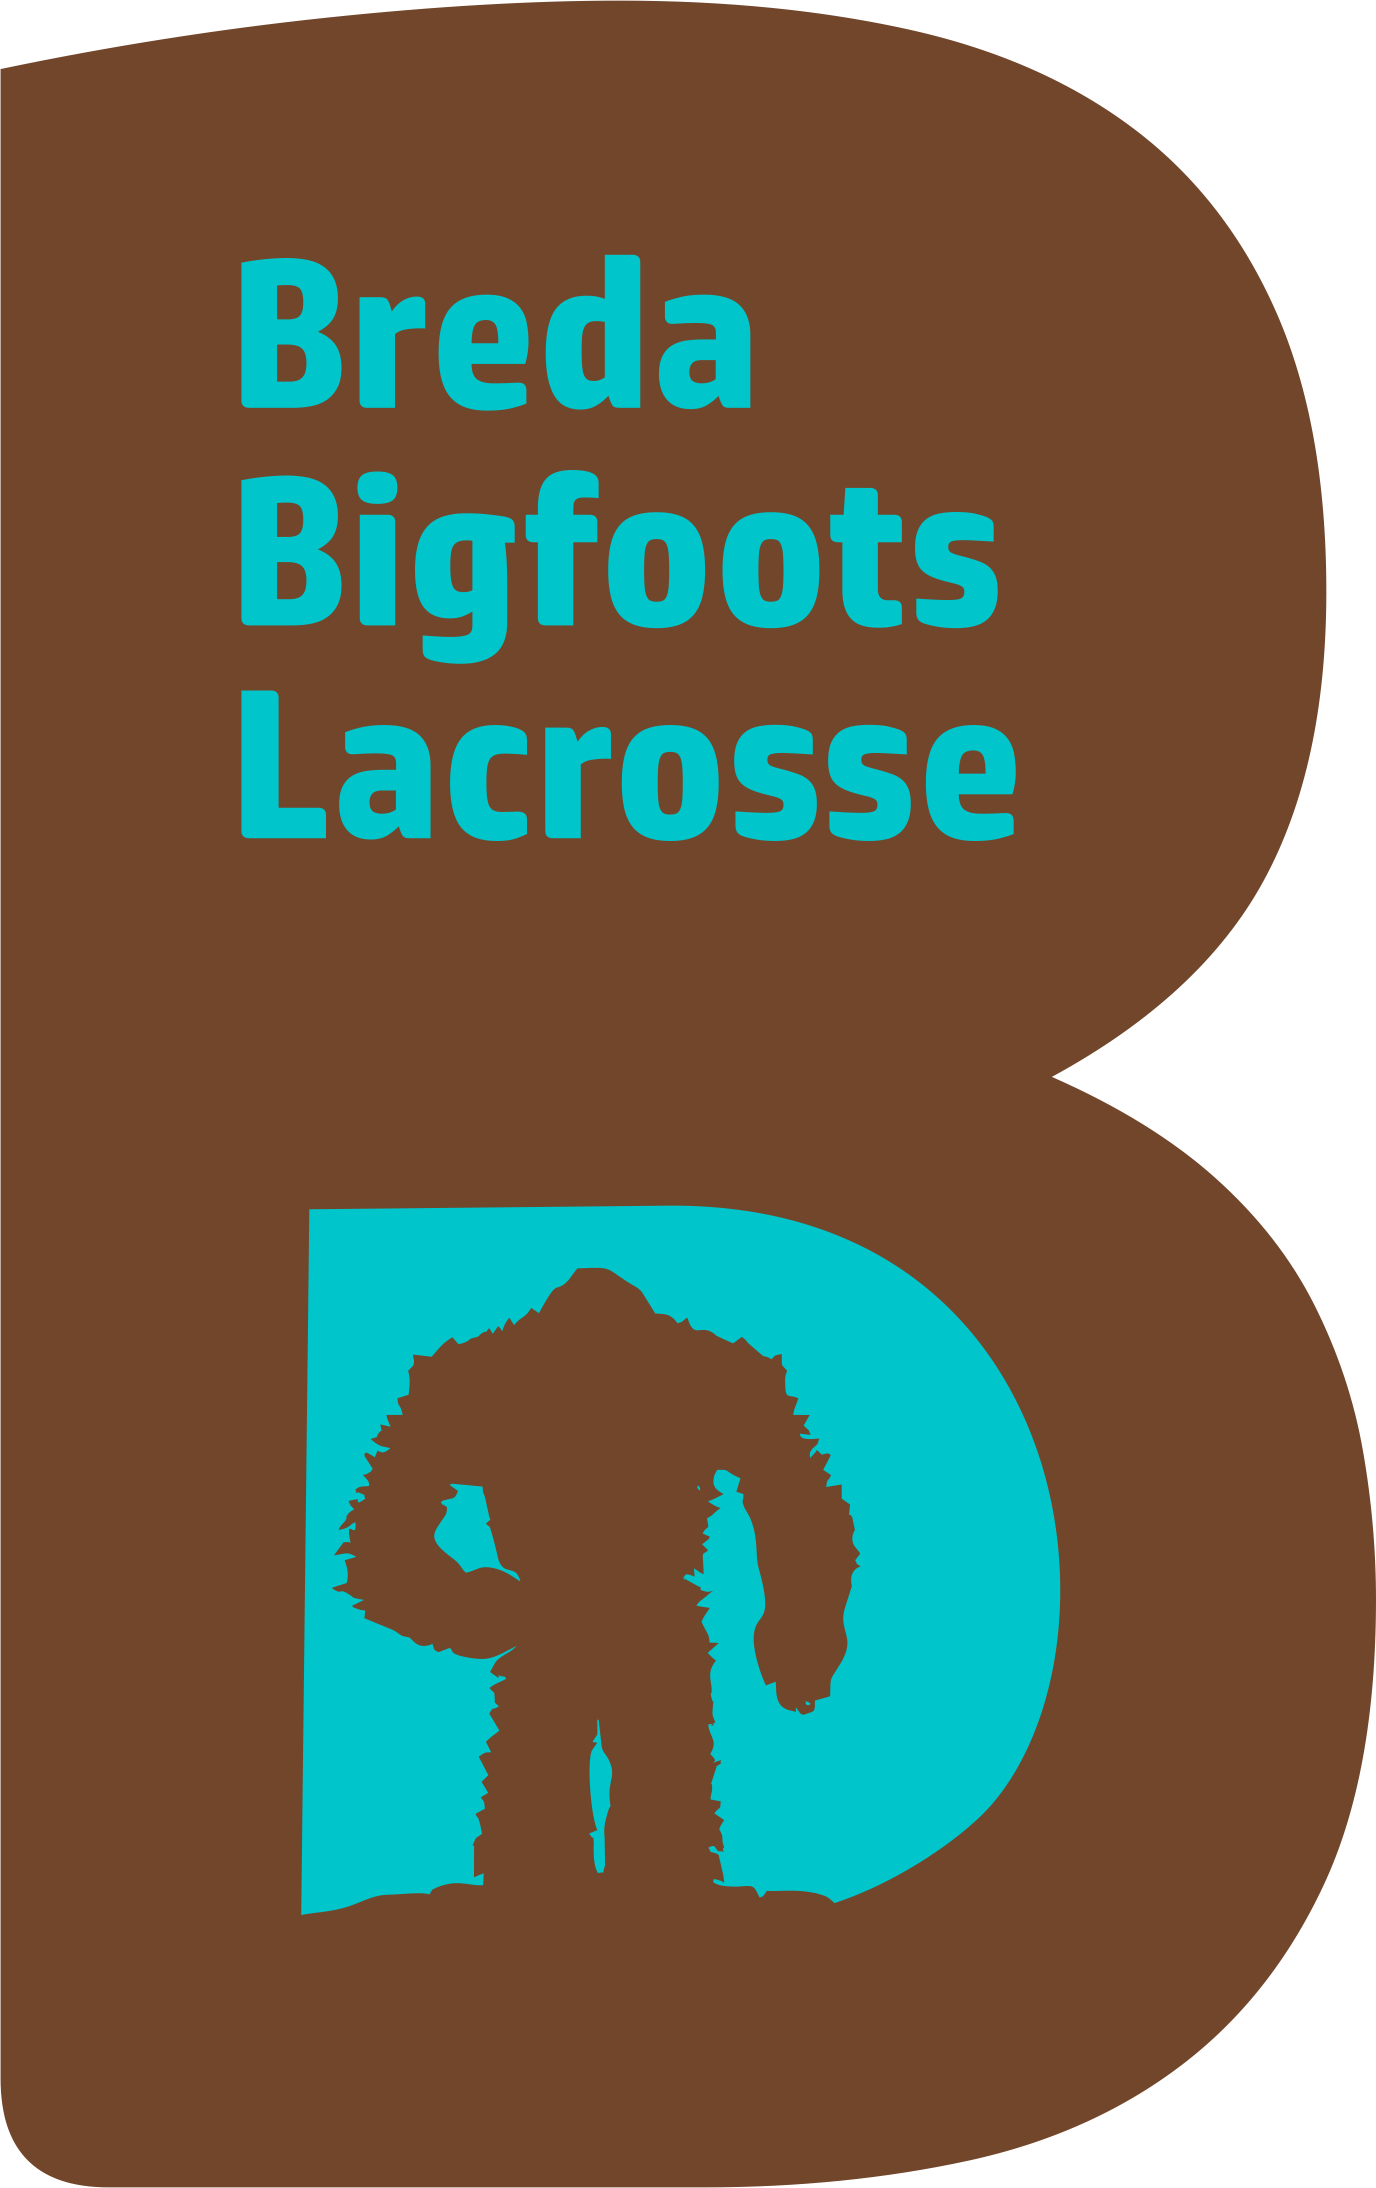 Breda Bigfoots Lacrosse Club